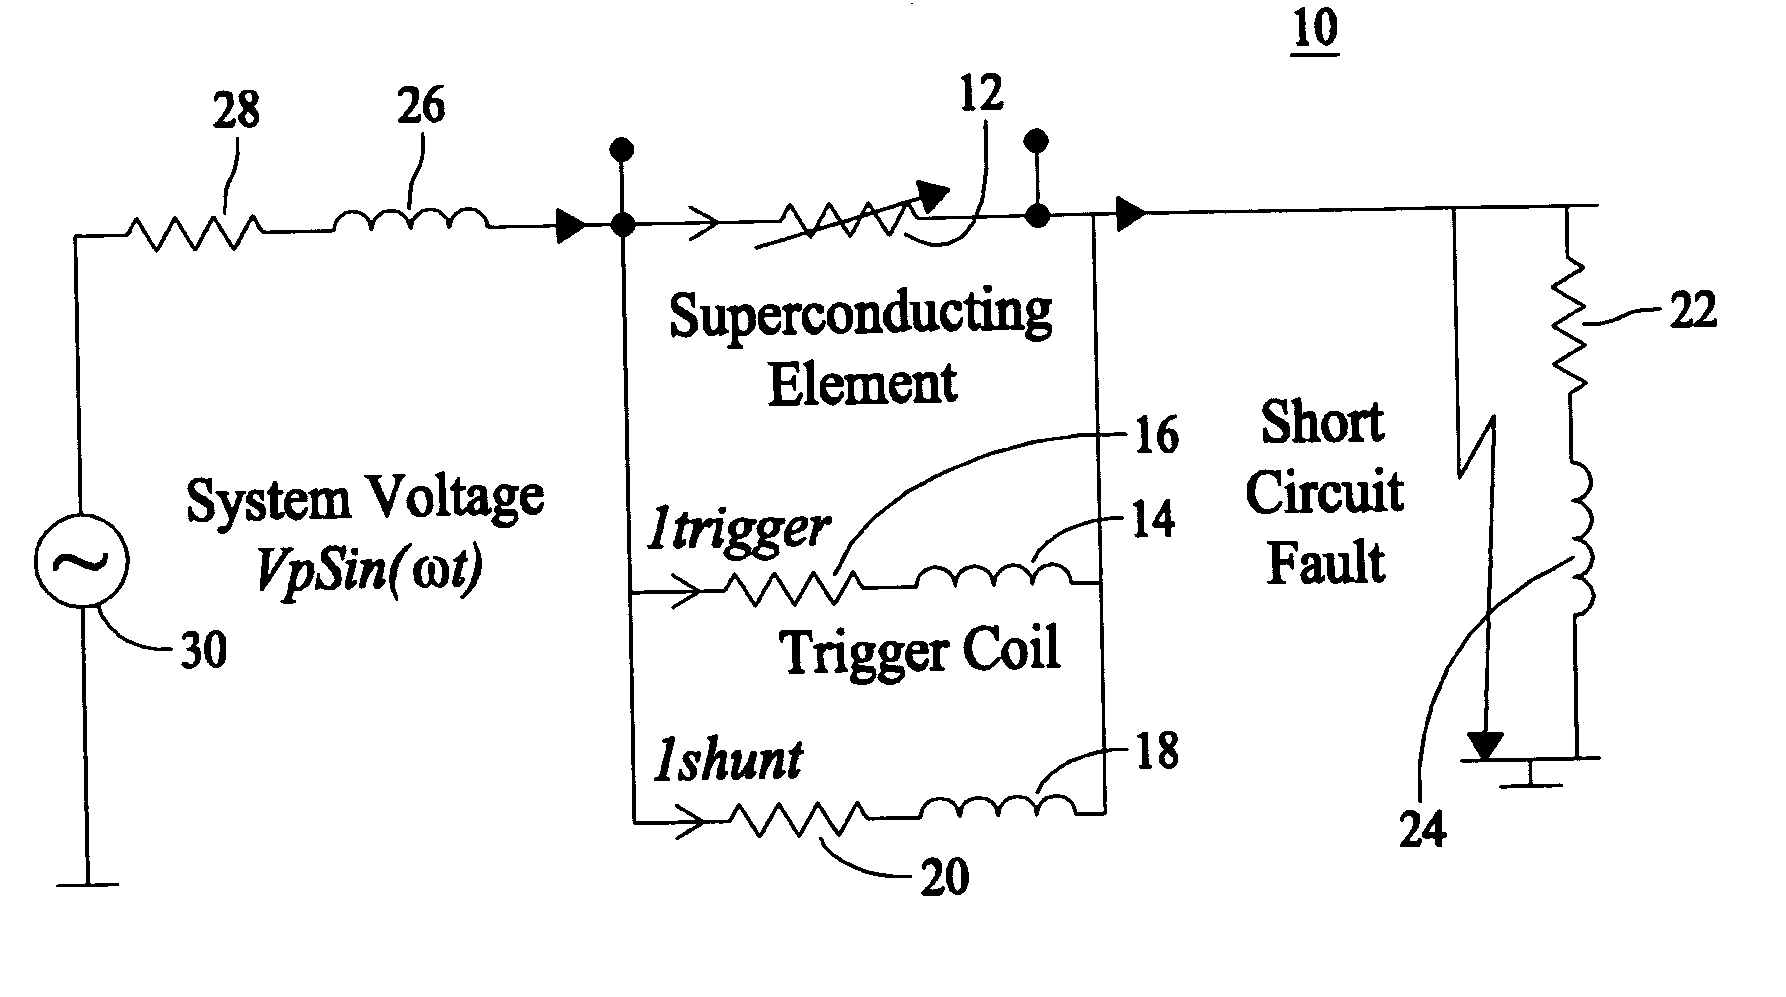 Self-triggering superconducting fault current limiter